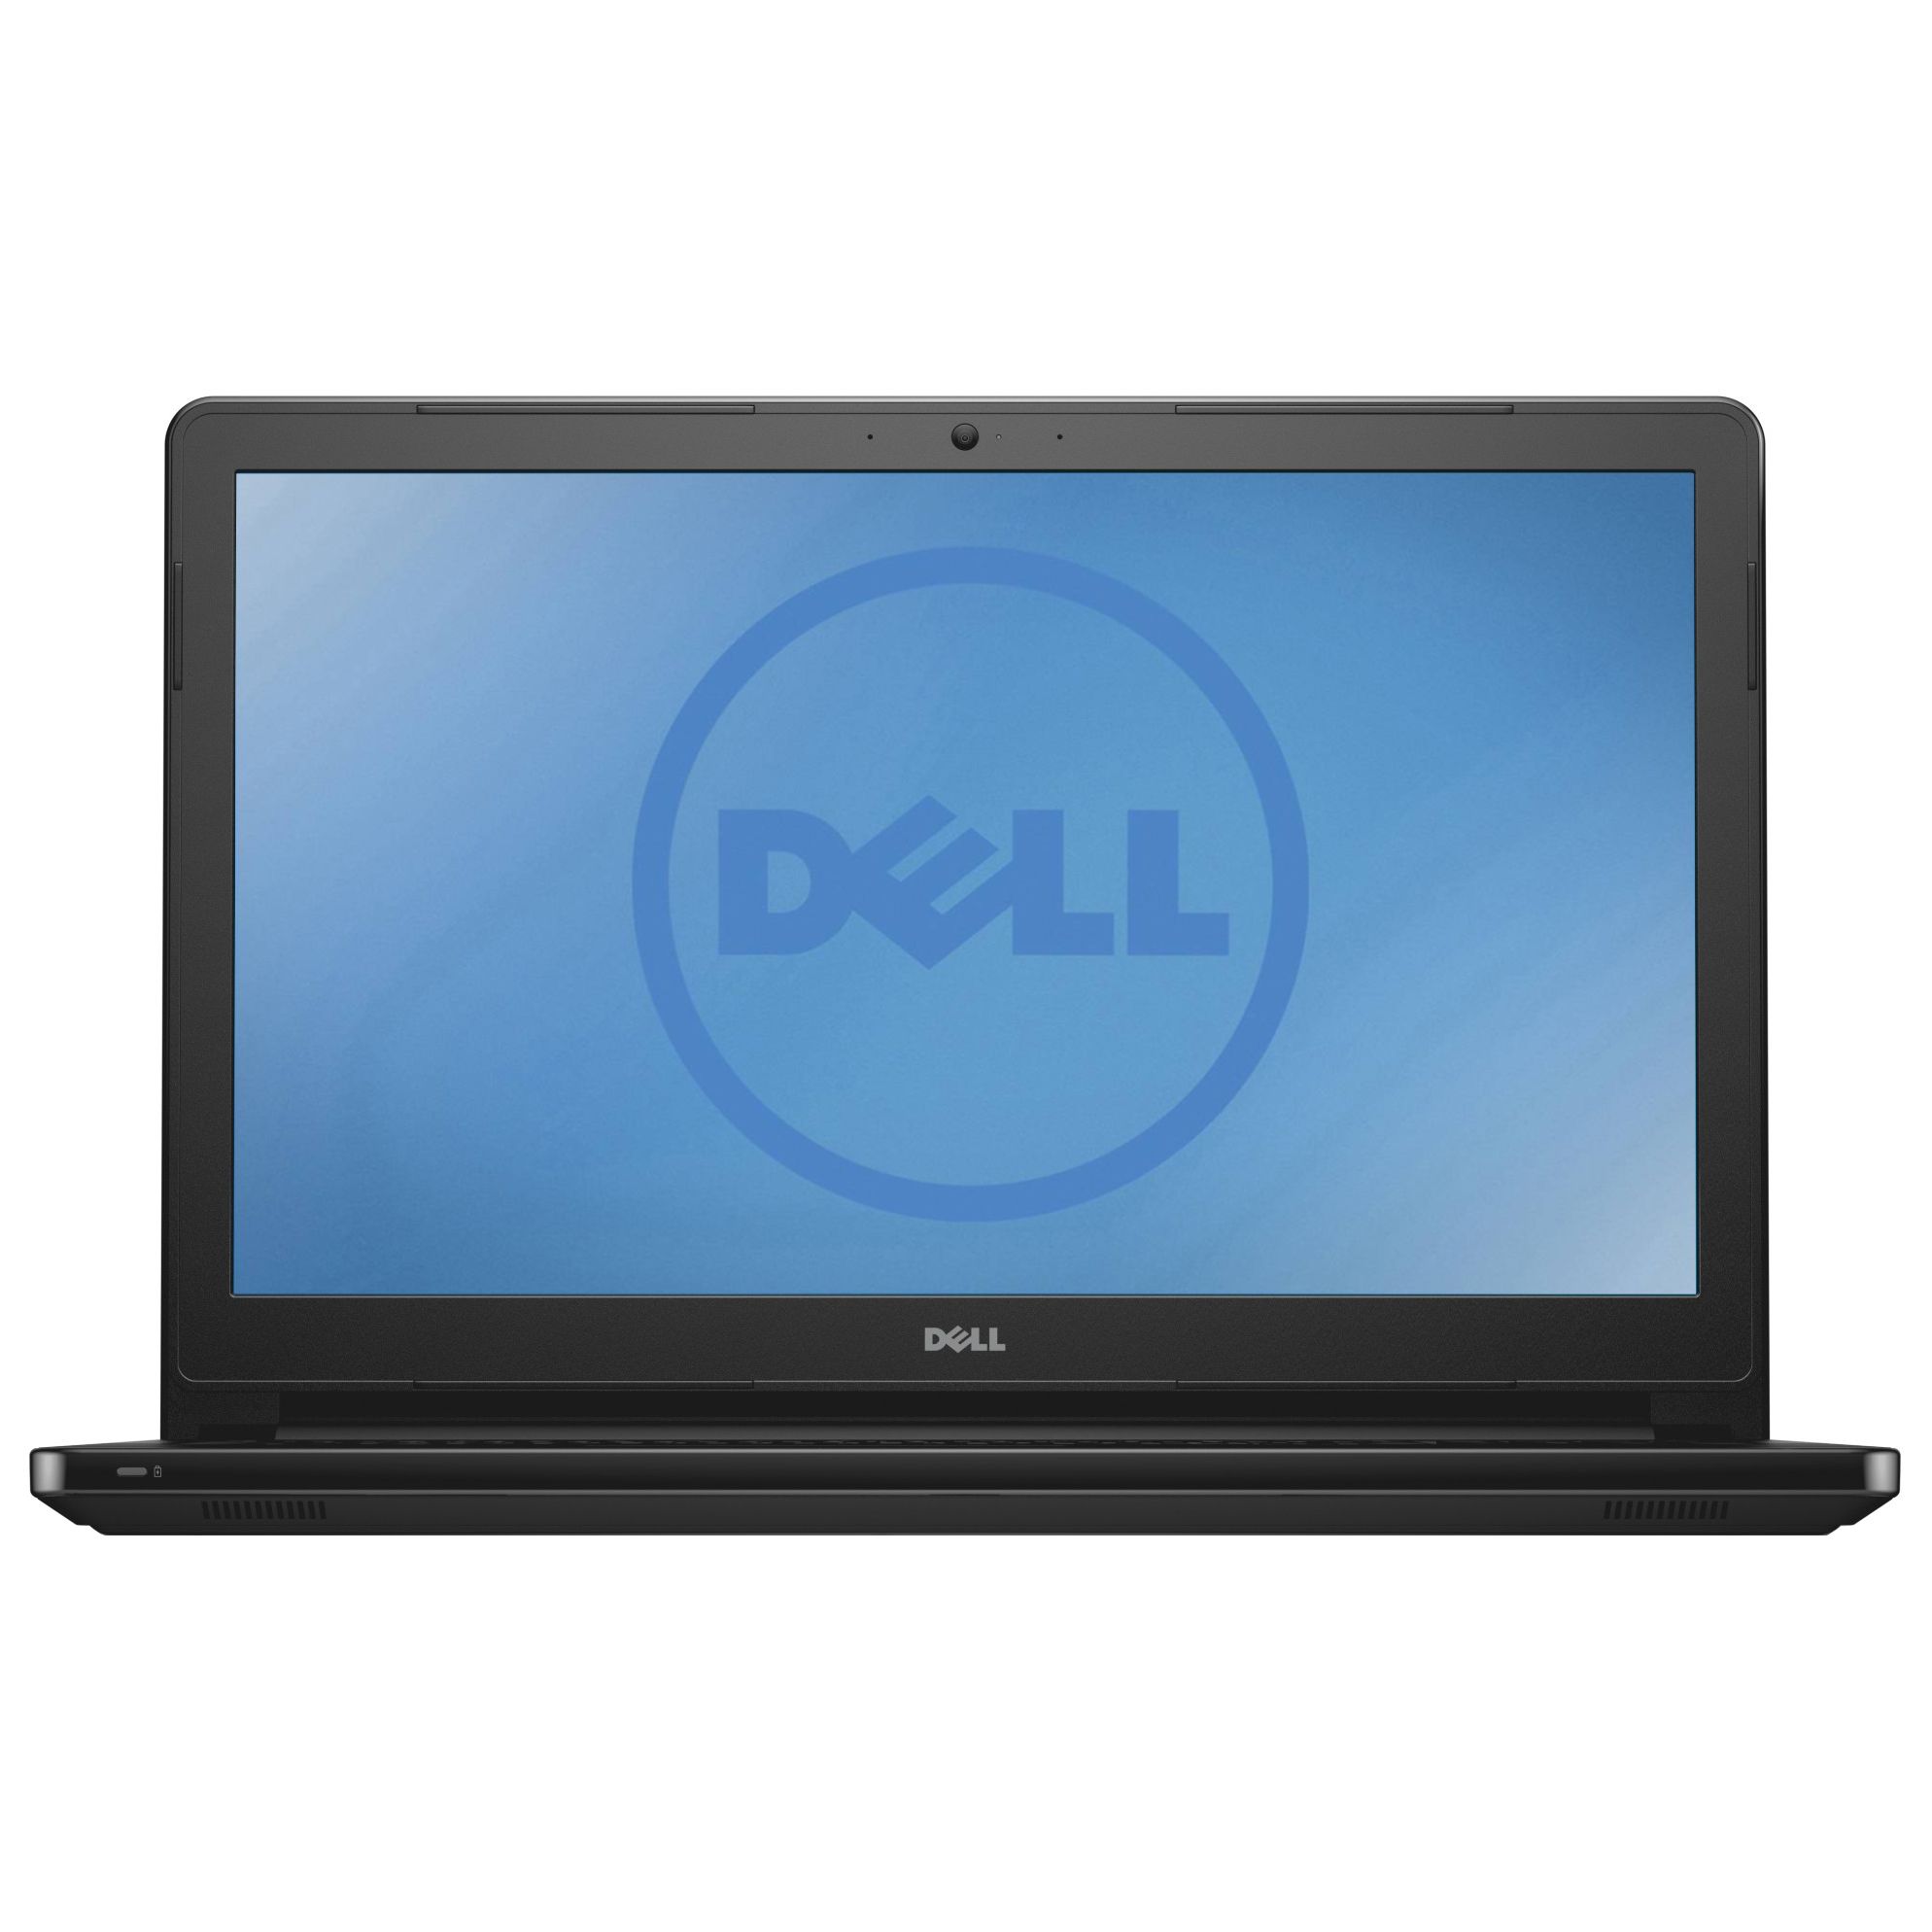  Laptop Dell Inspiron 5558, Intel Core i3-4005U, 4GB DDR3, HDD 500GB, nVidia GeForce 920M 2GB, Linux 